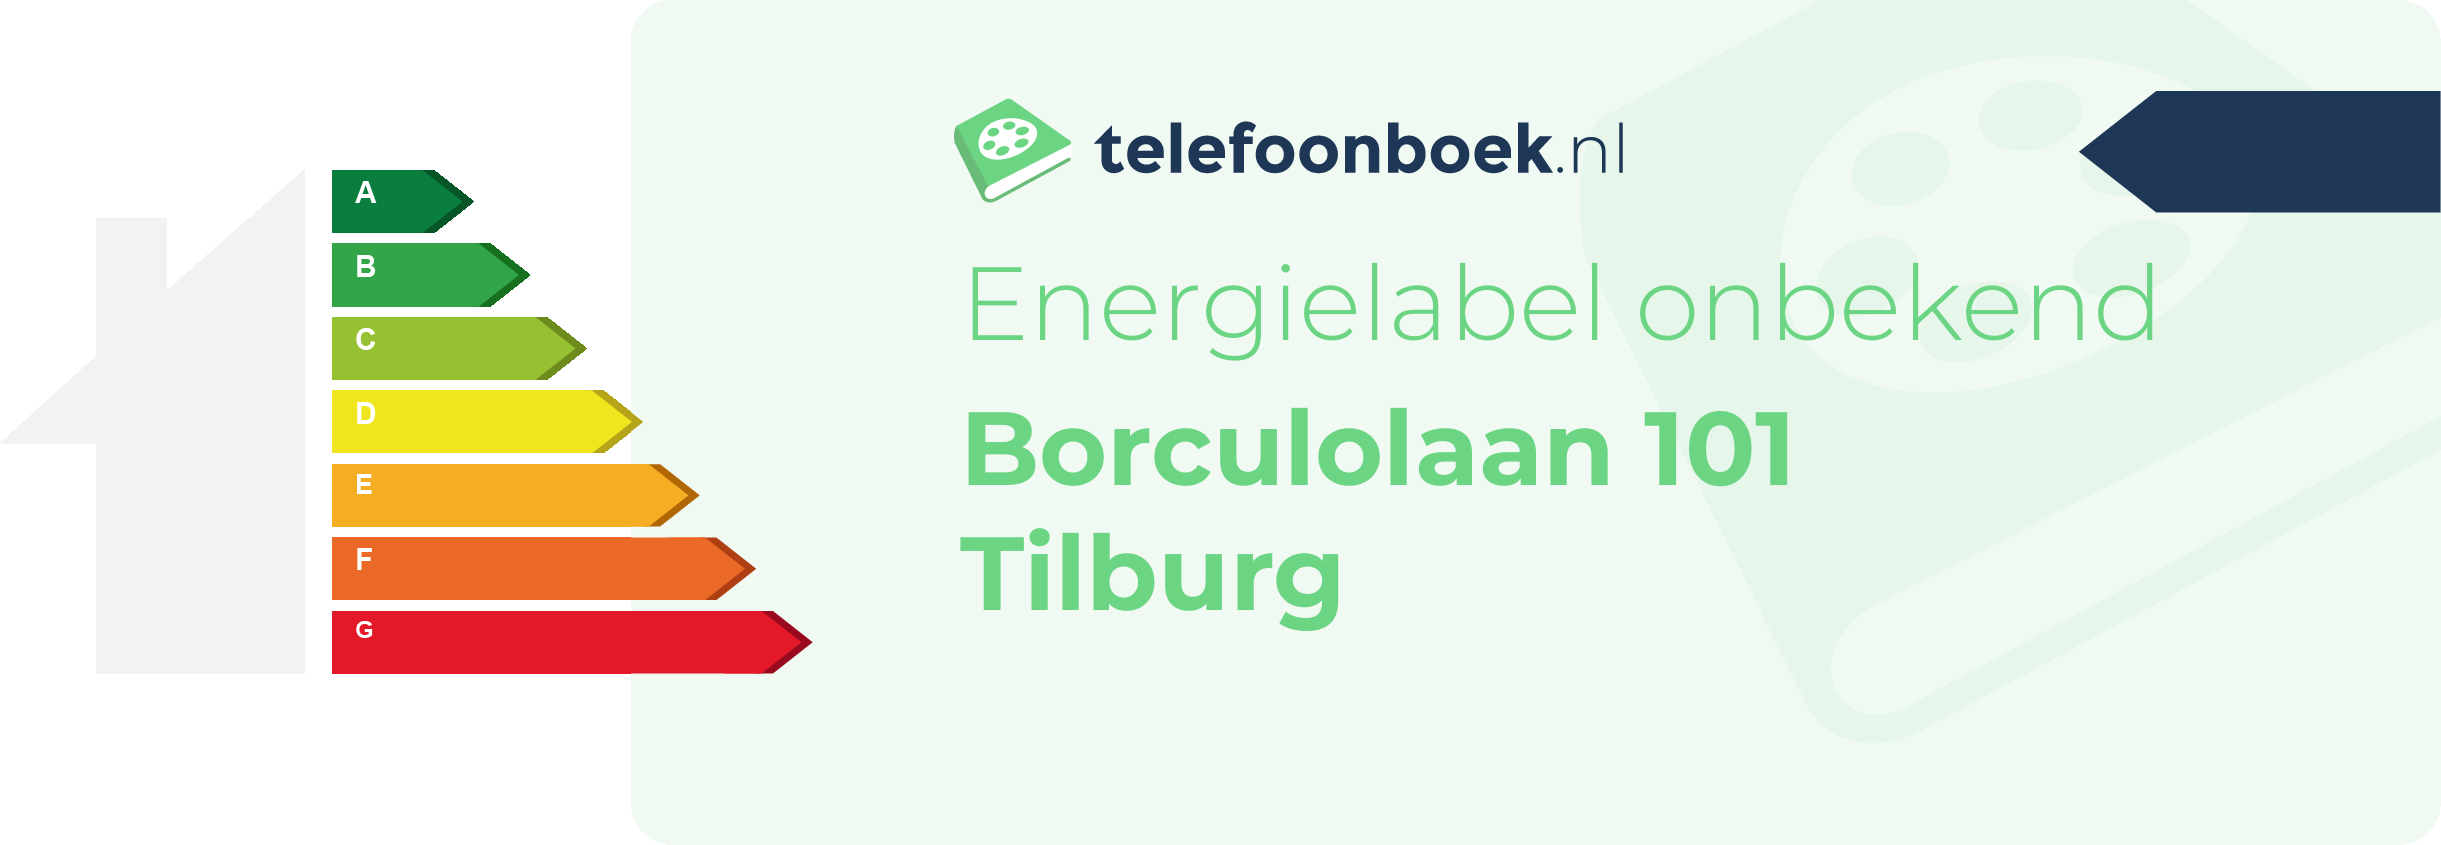 Energielabel Borculolaan 101 Tilburg